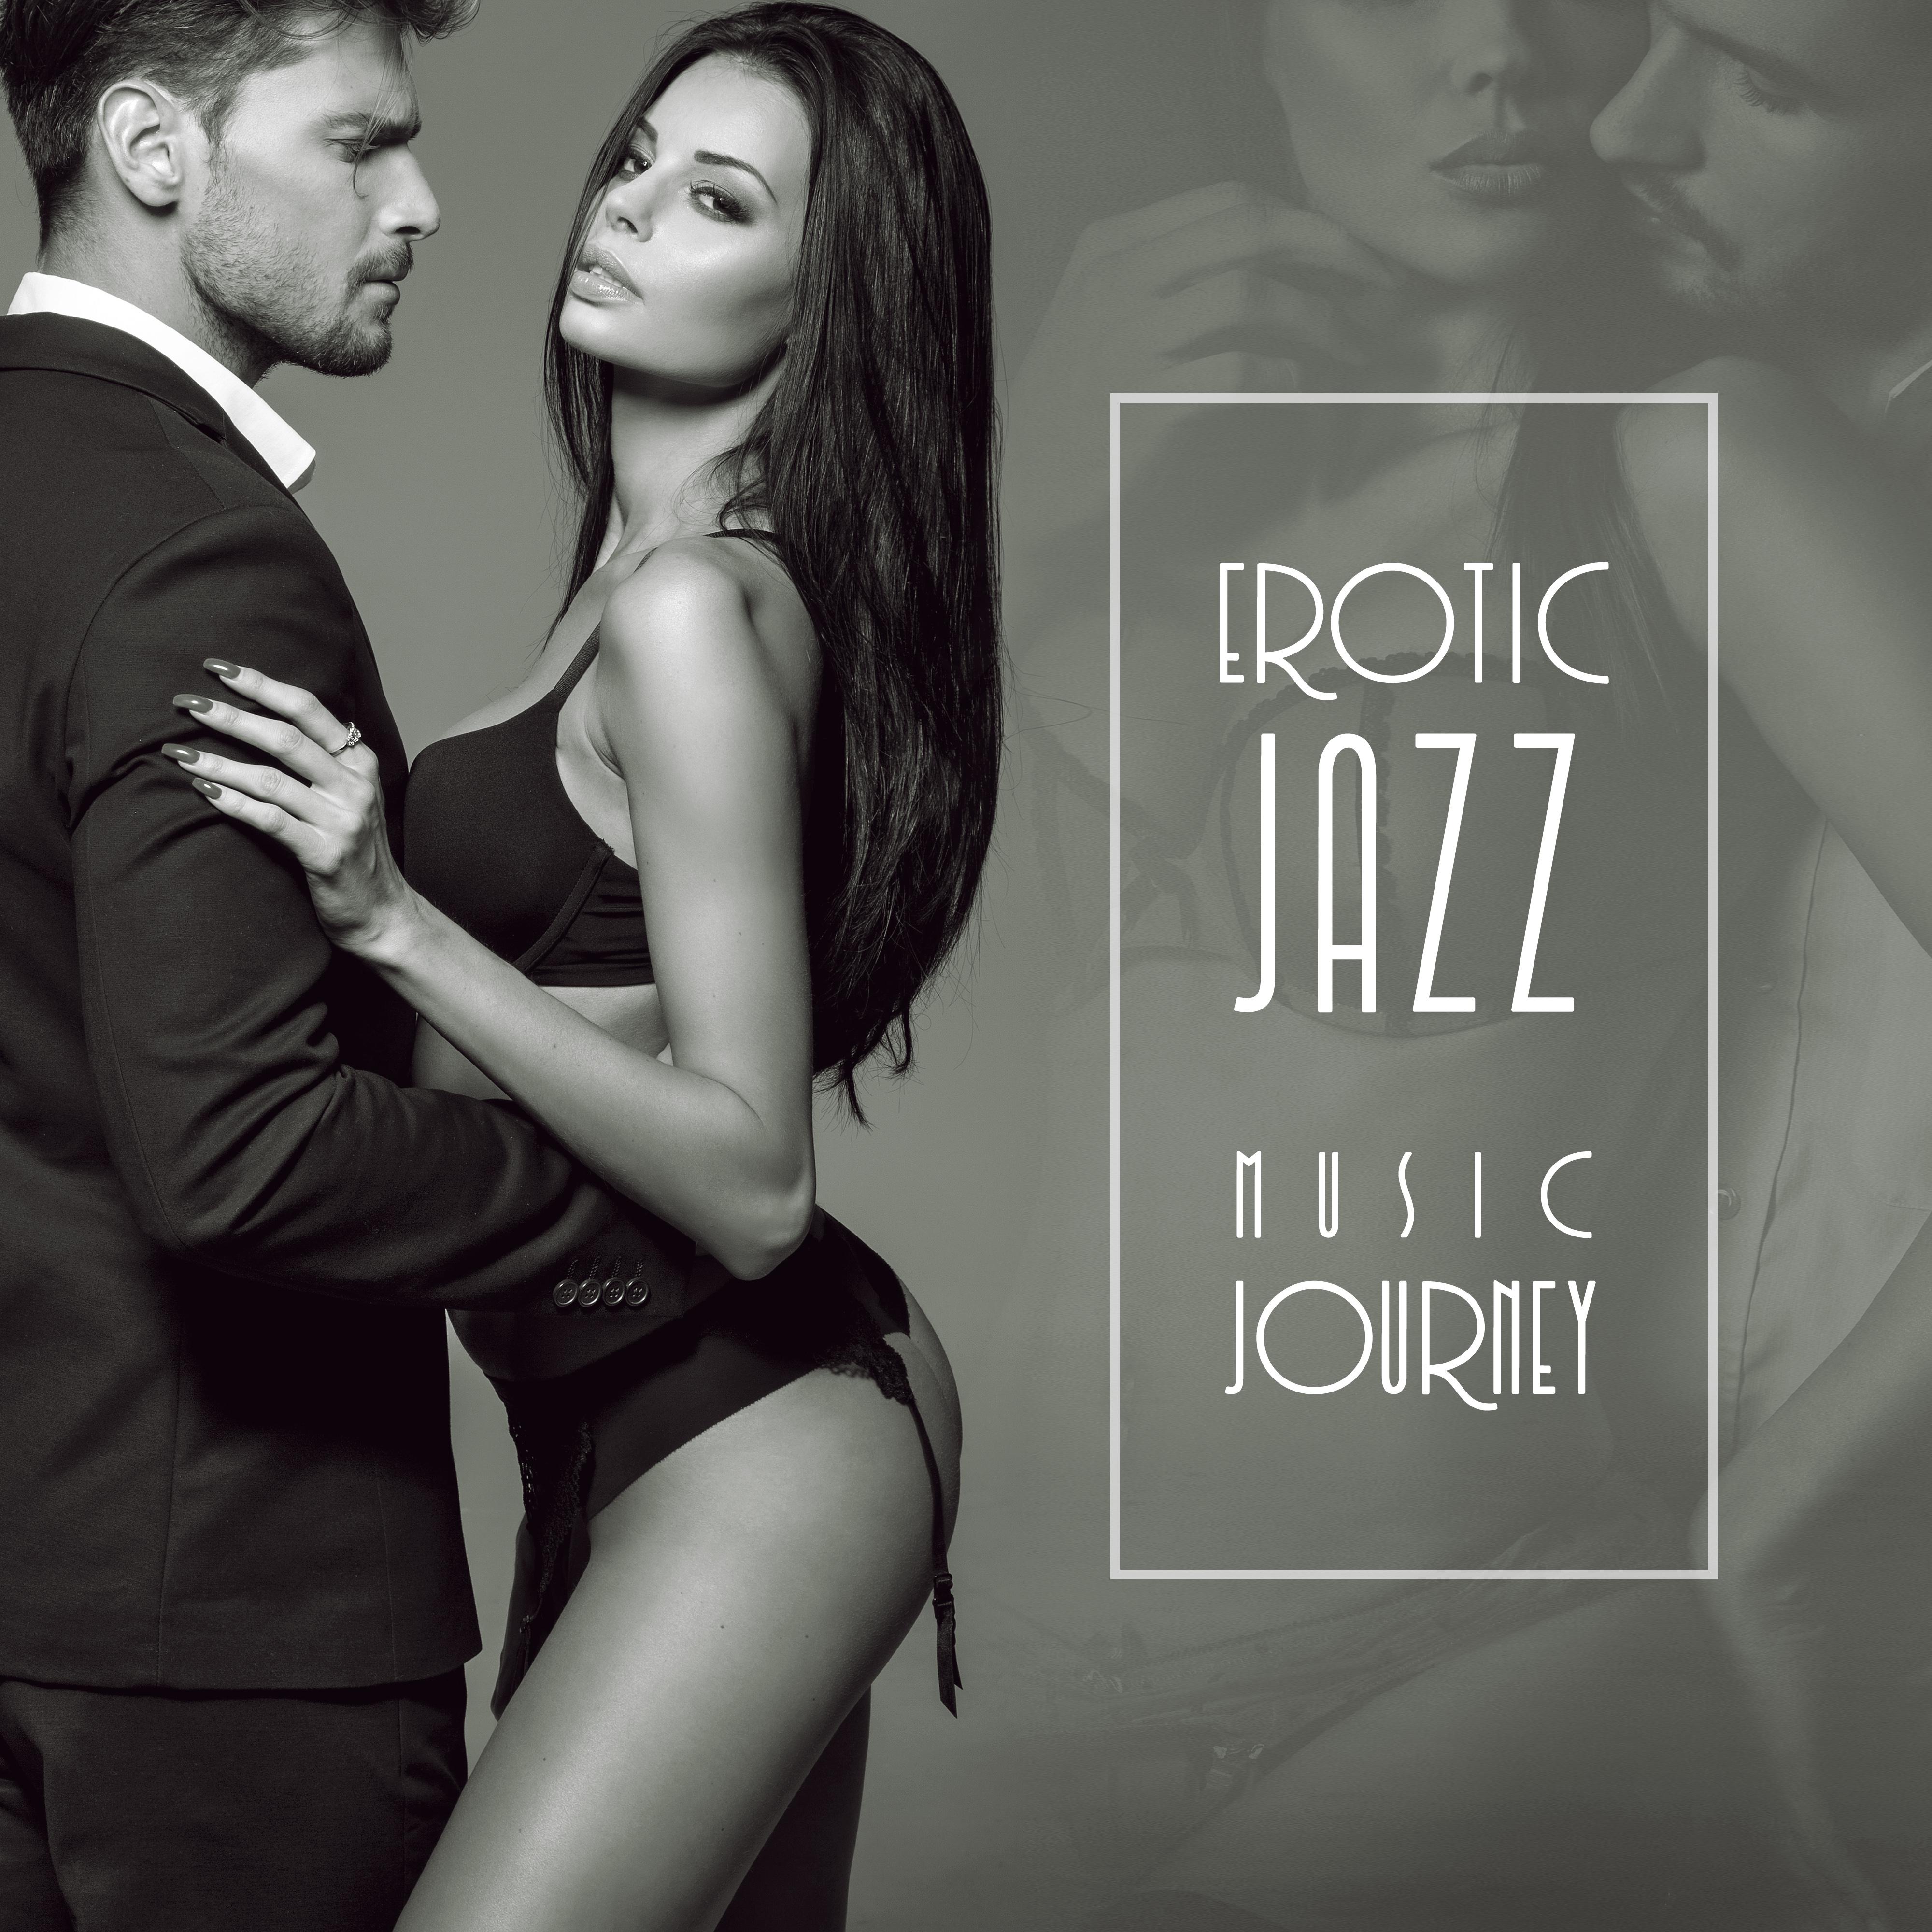 Erotic Jazz Music Journey